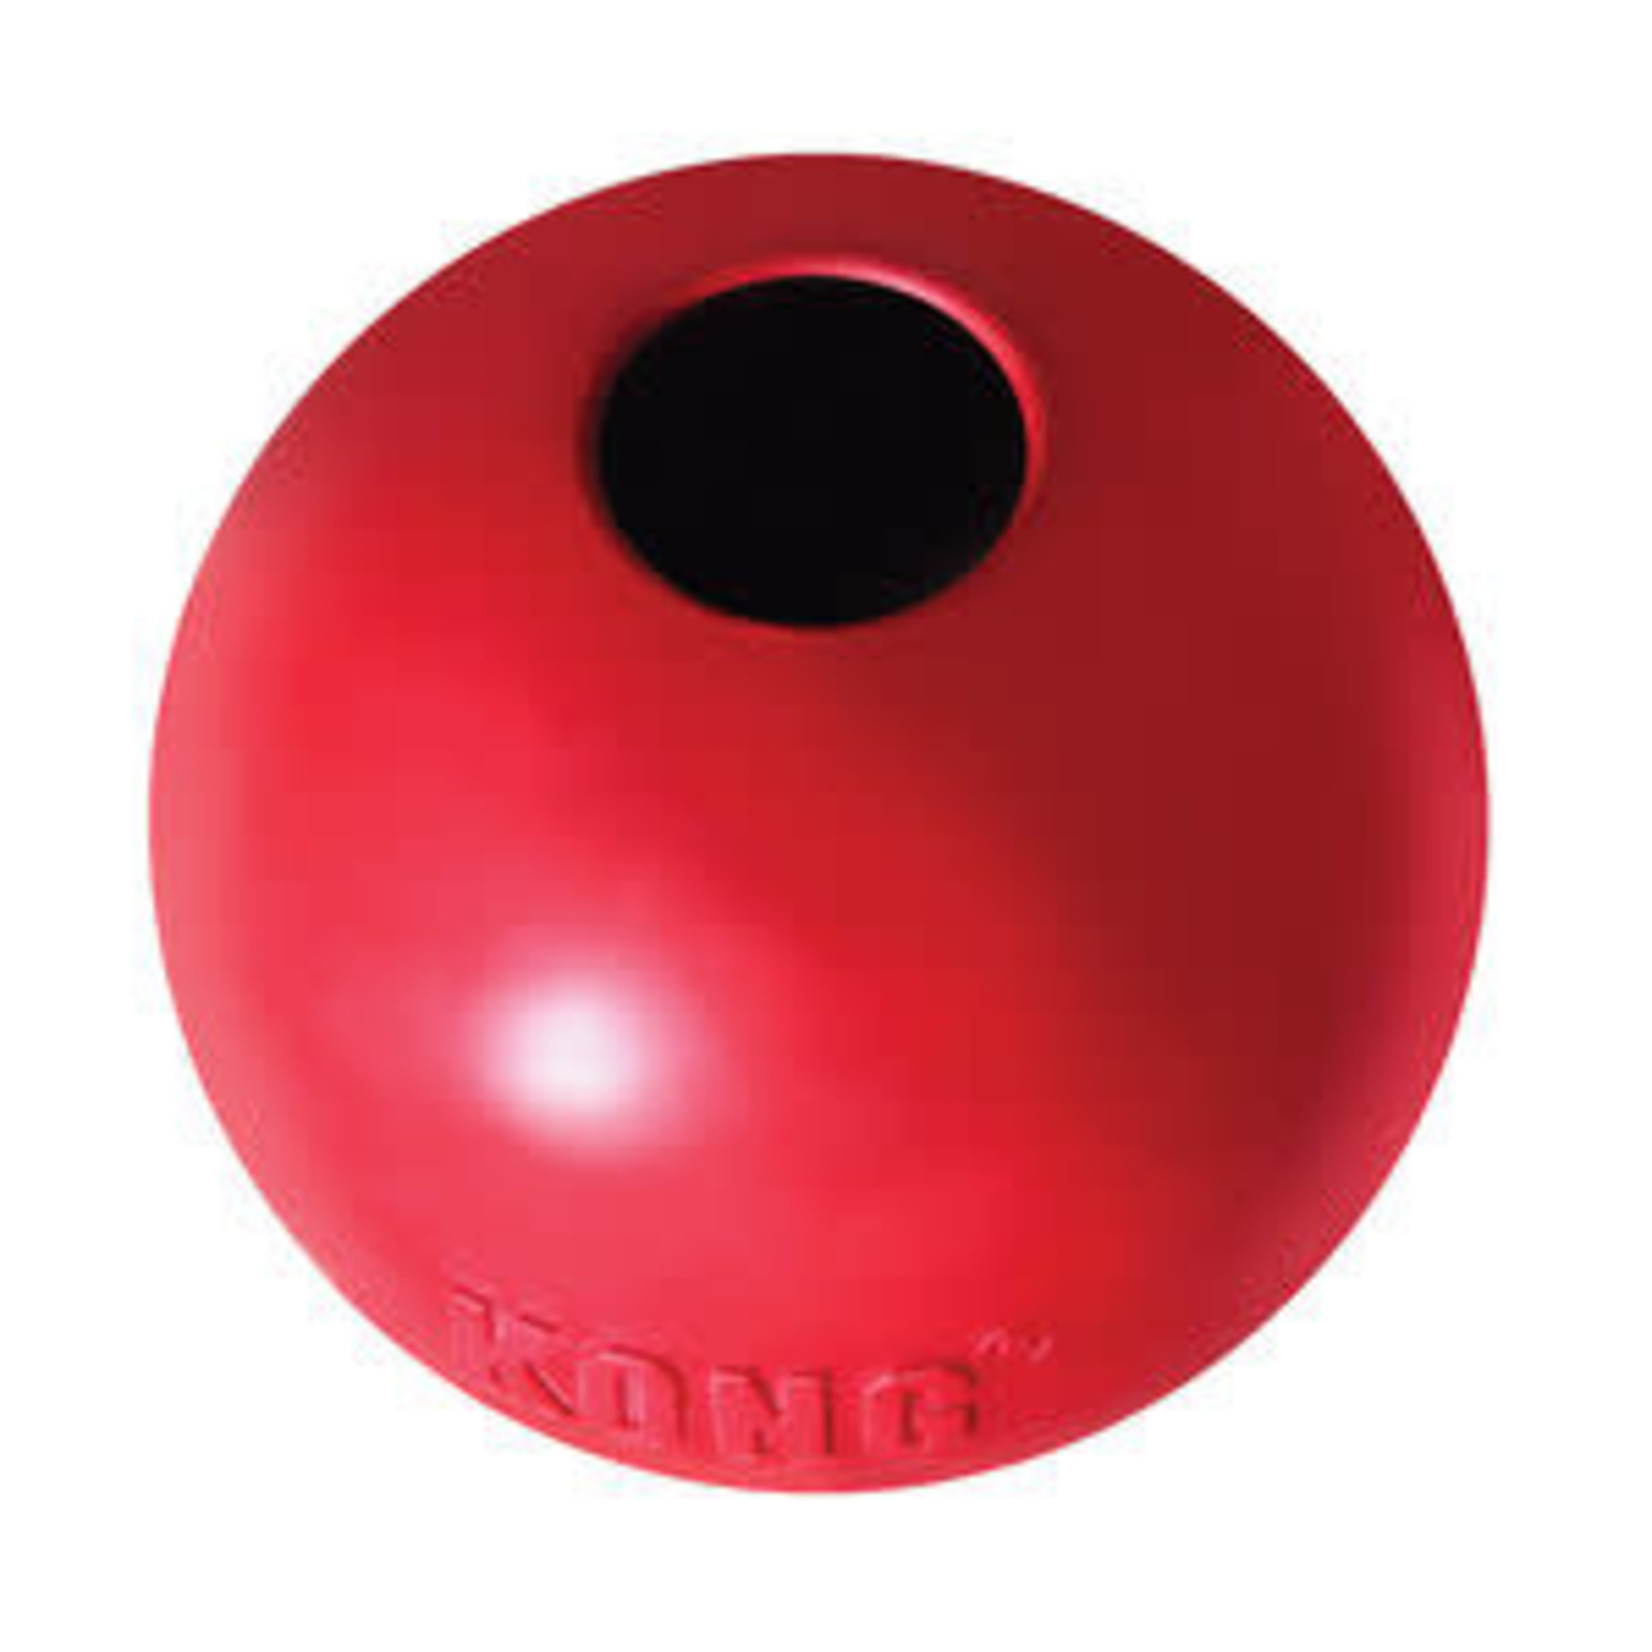 KONG Kong Red Ball